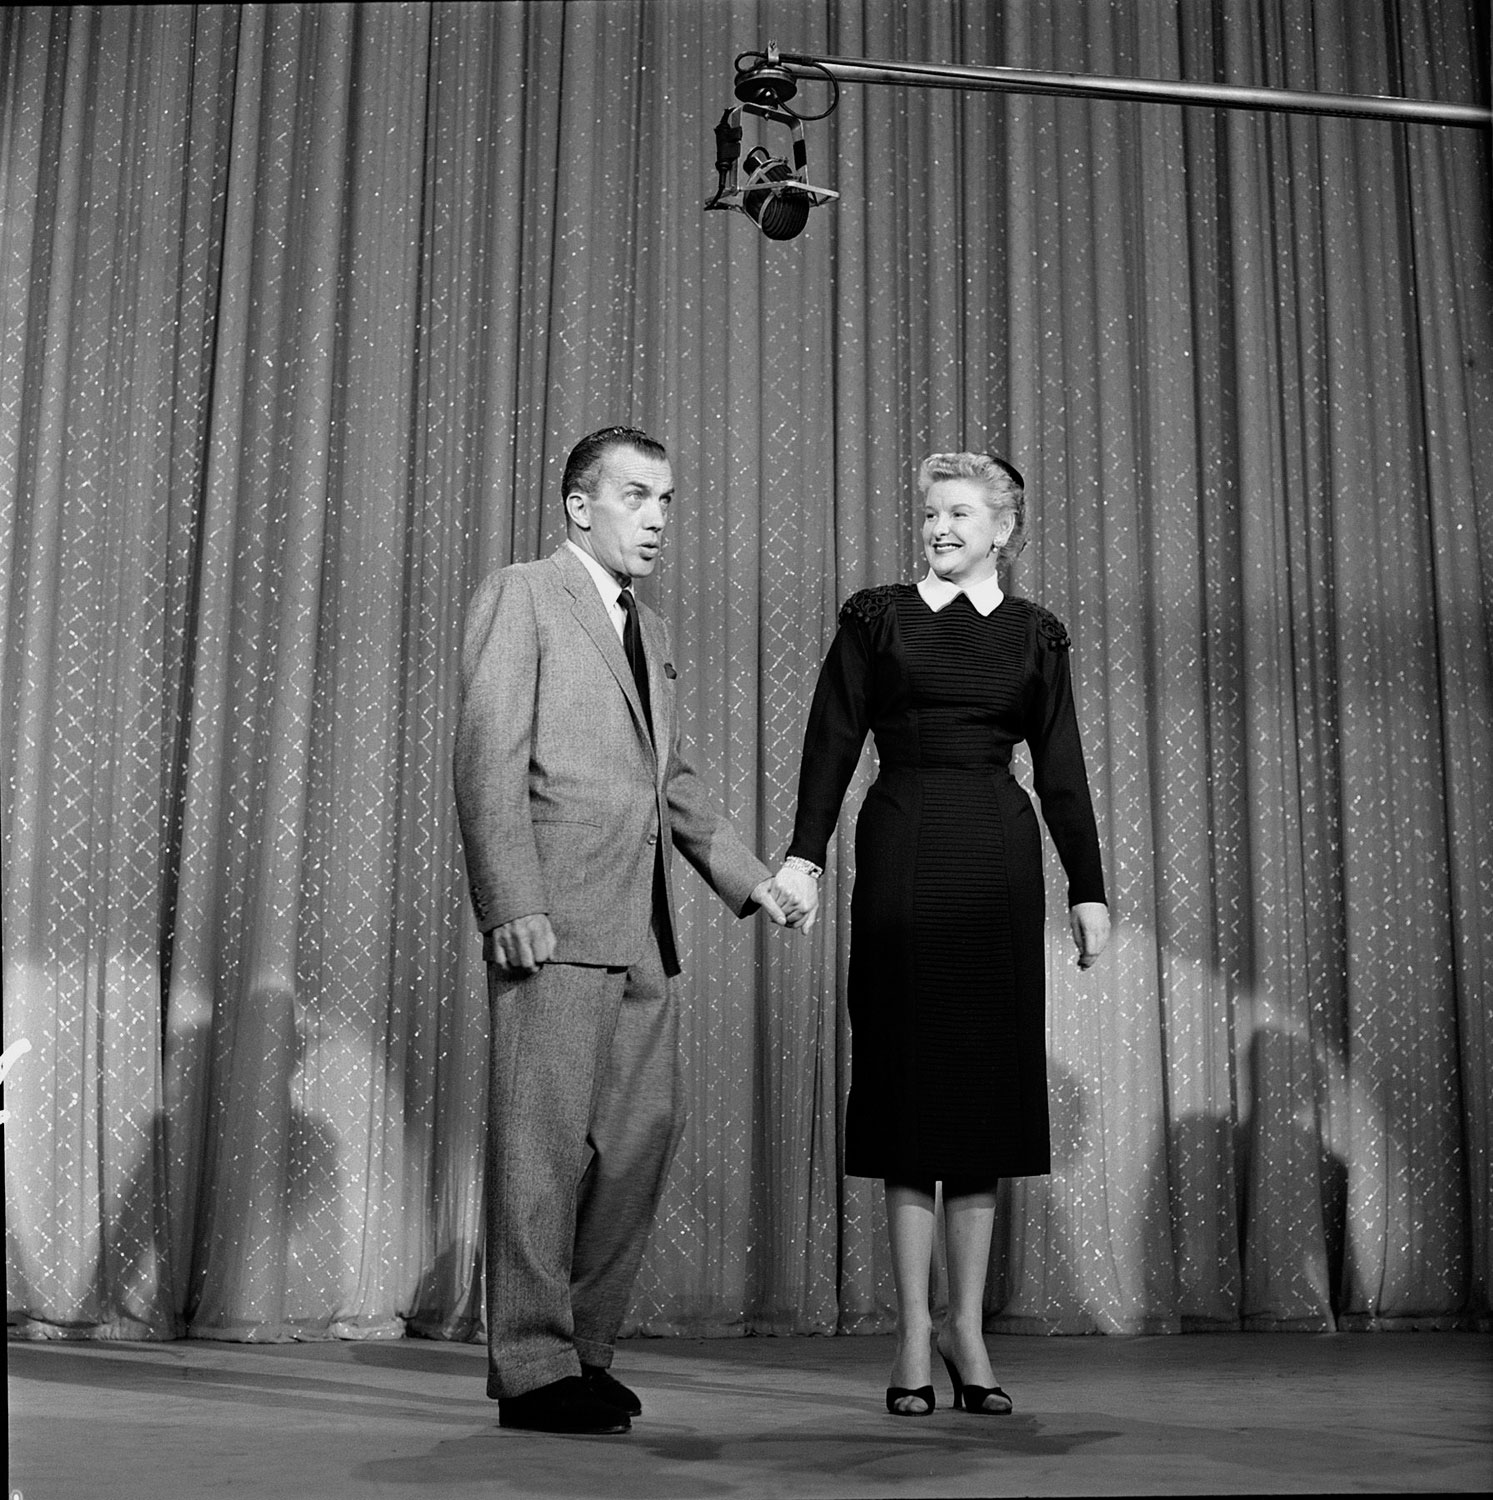 Ed Sullivan talks with Elaine Stritch on TOAST OF THE TOWN on November 14, 1954.